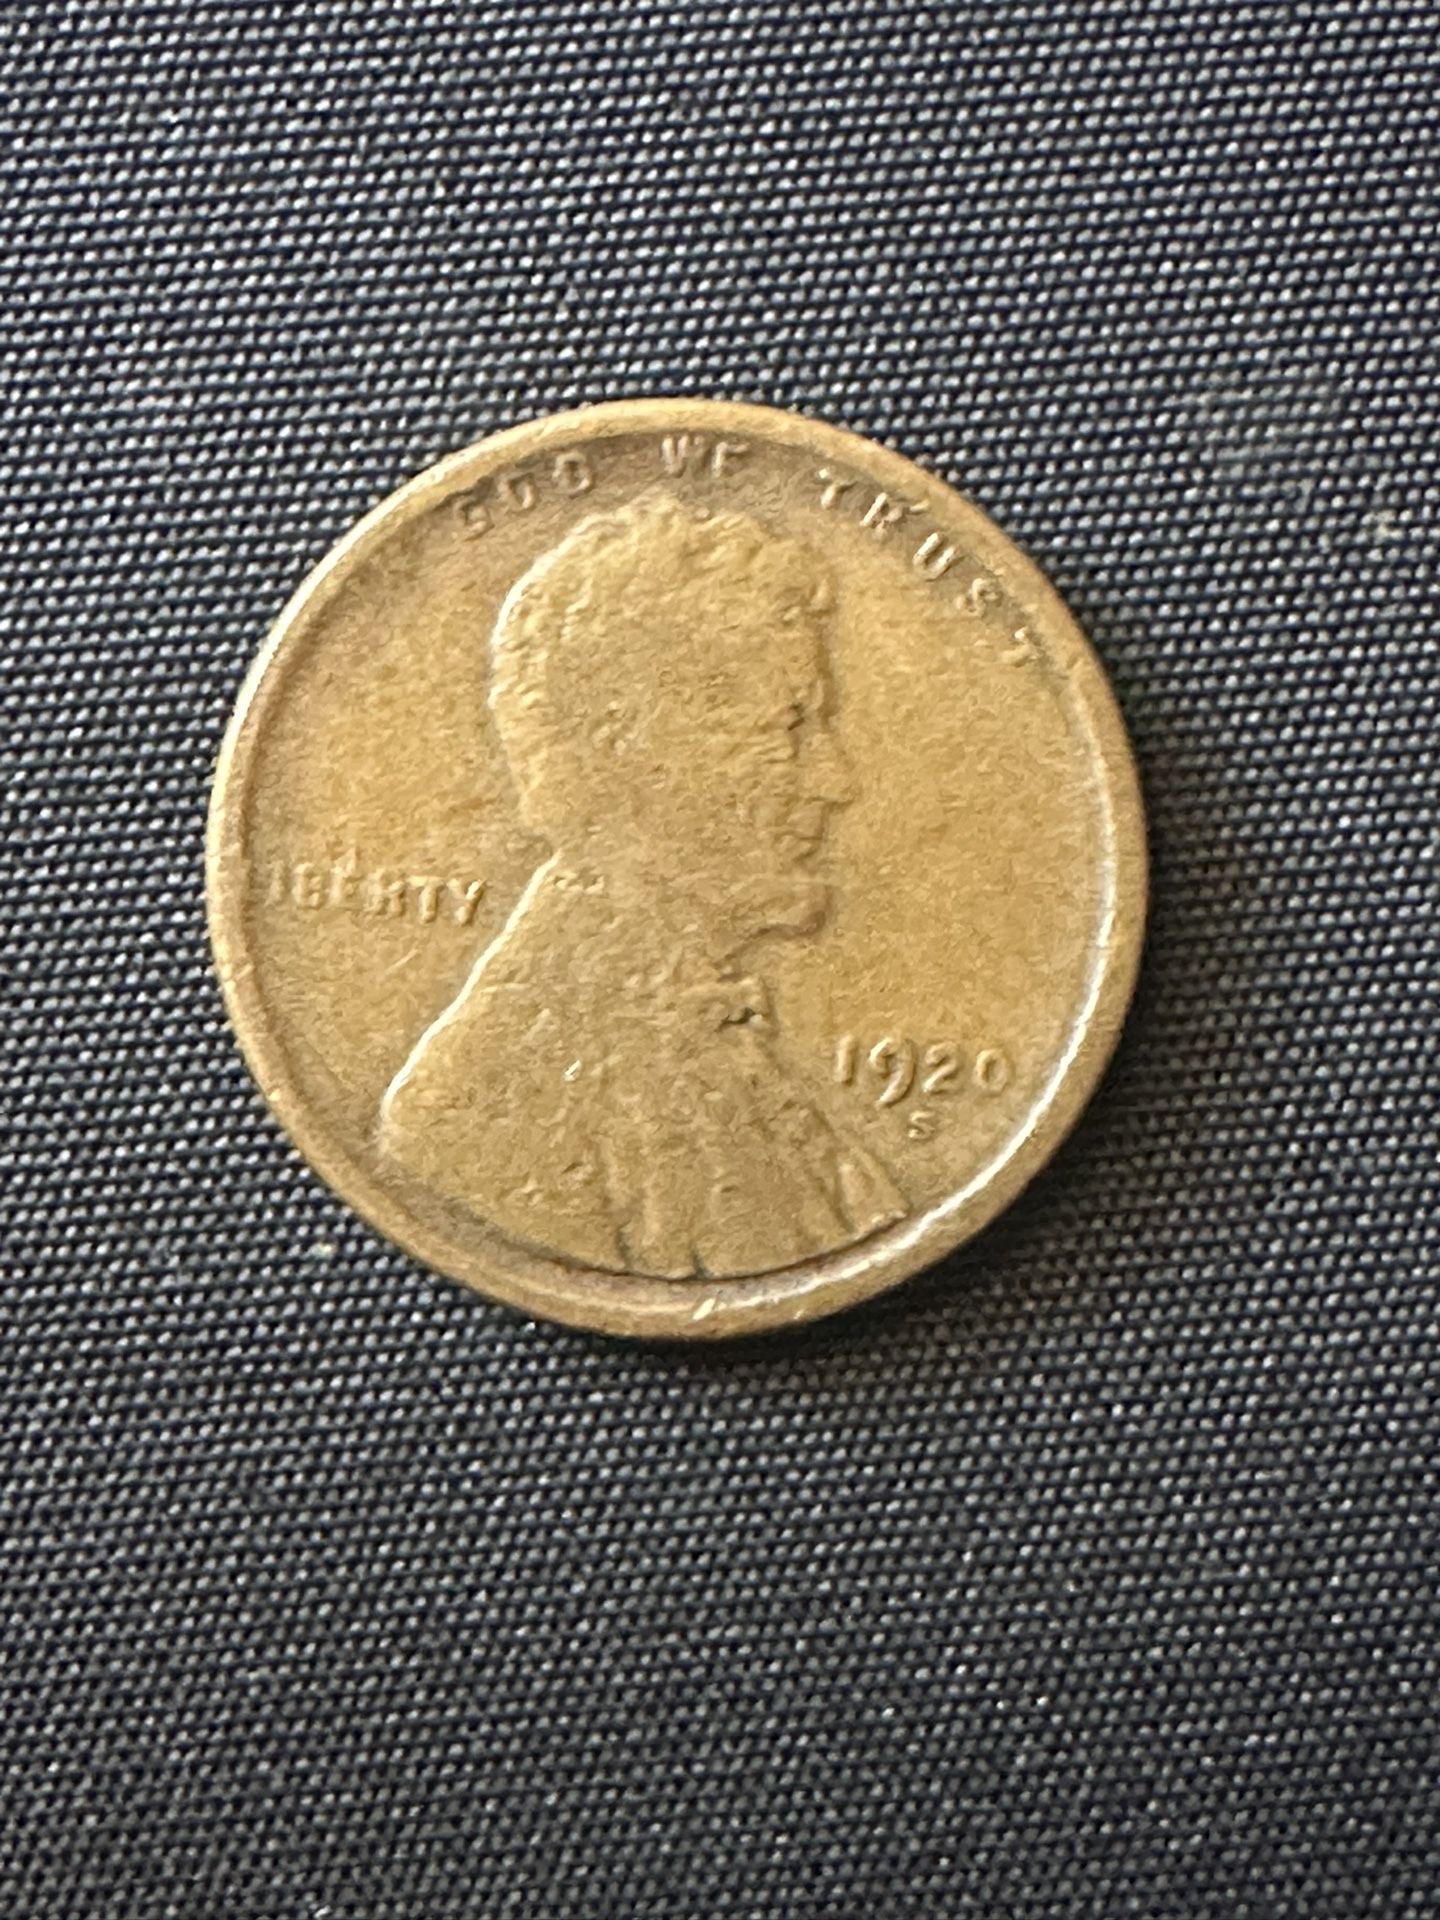 1920 S Penny